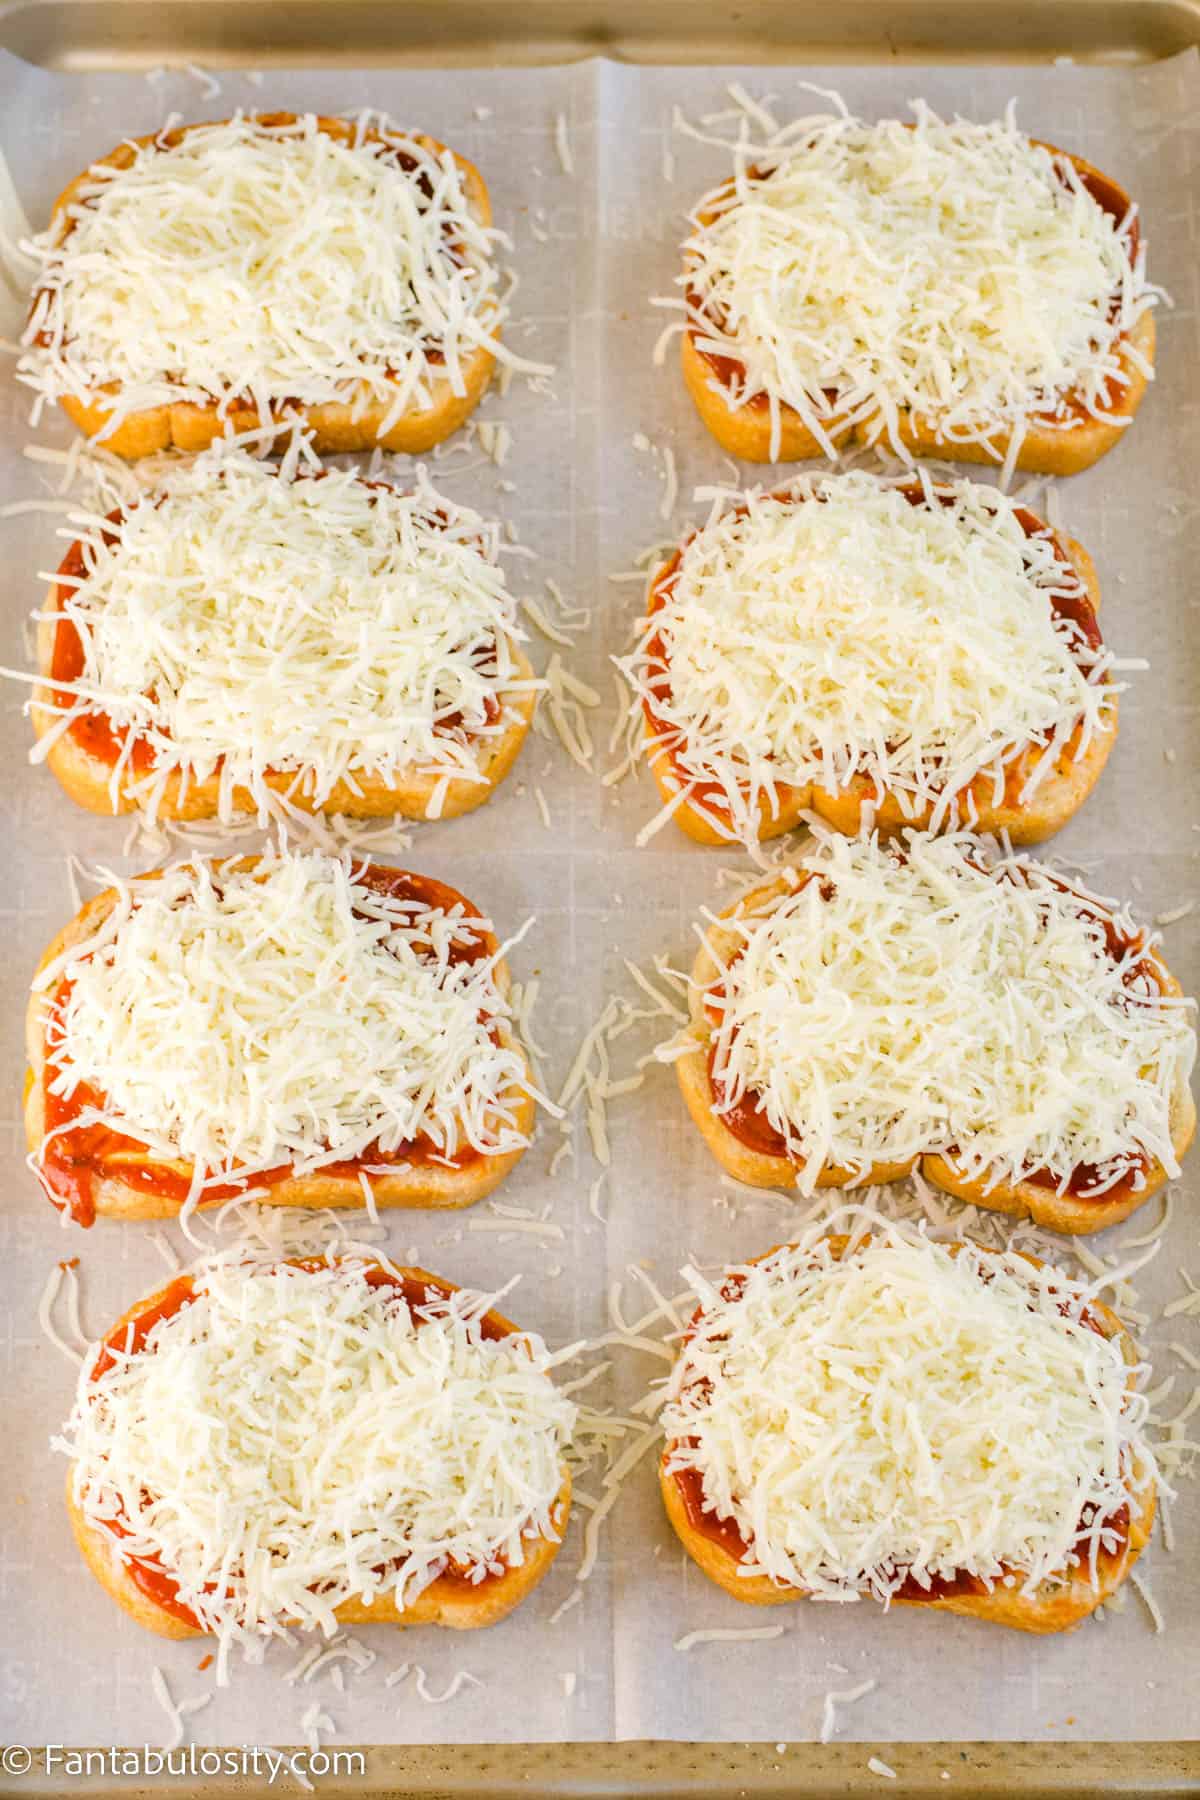 Shredded mozzarella cheese on top of garlic cheese toast